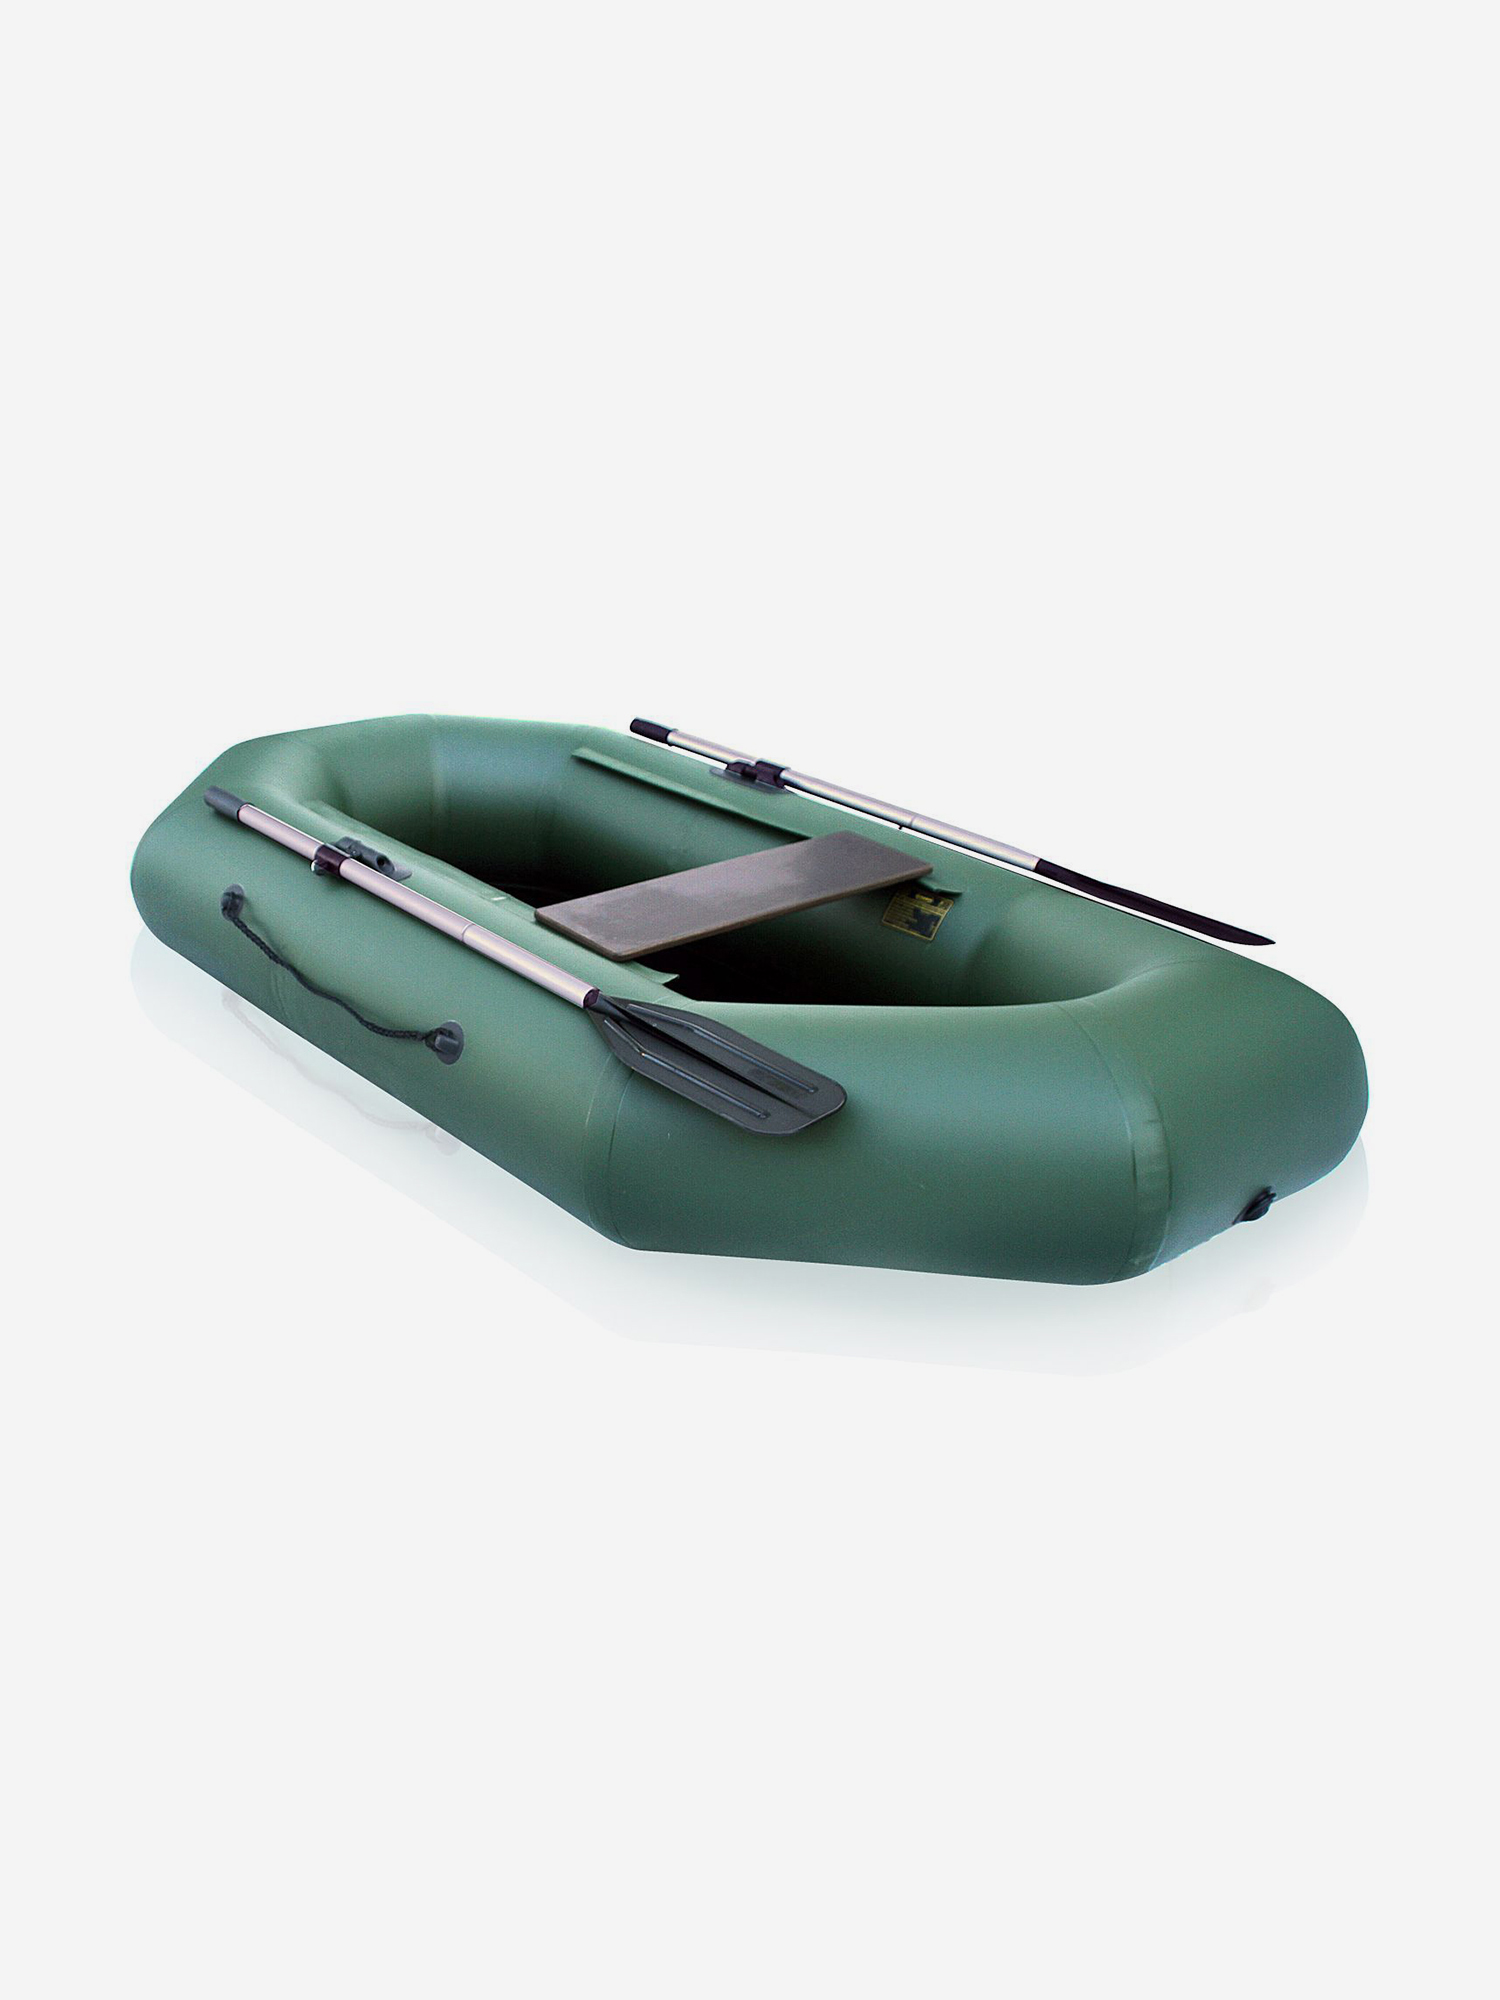 Лодка ПВХ Компакт-220N- натяжное дно (зеленый цвет) упаковка-мешок оксфорд,